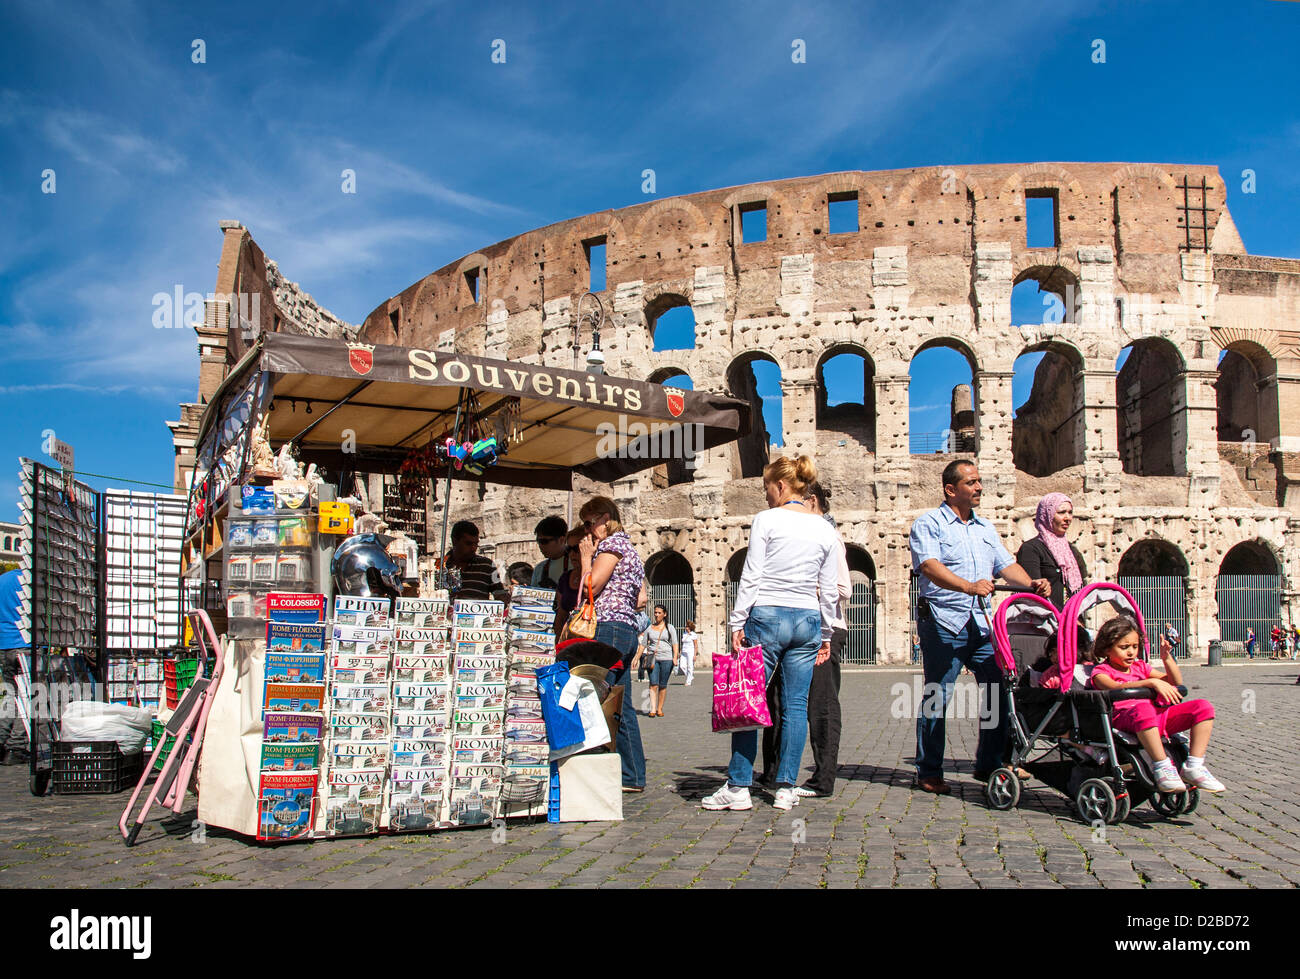 Souvenir stand, Colosseum, Rome, Italy Stock Photo